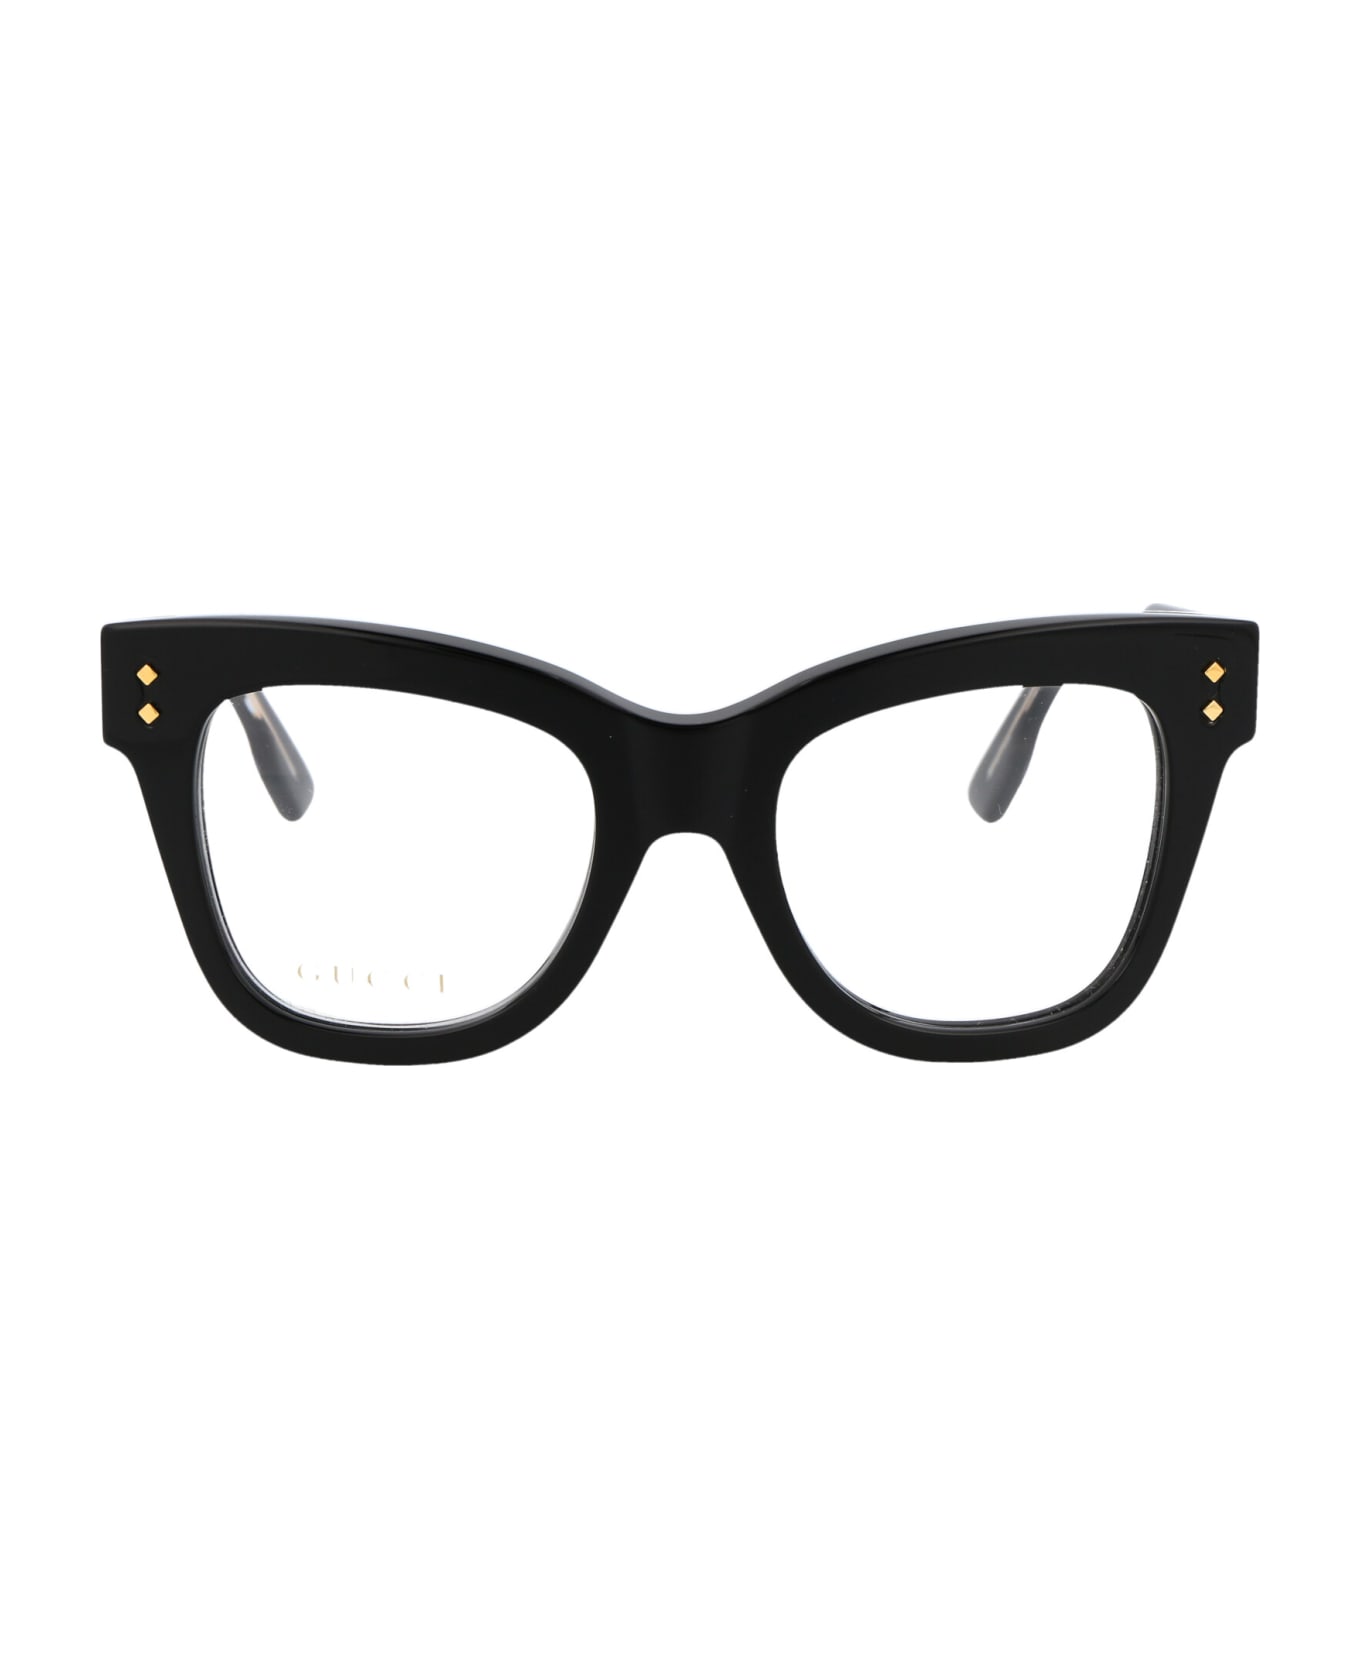 Gucci Eyewear Gg1082o Glasses - 001 BLACK BLACK TRANSPARENT アイウェア